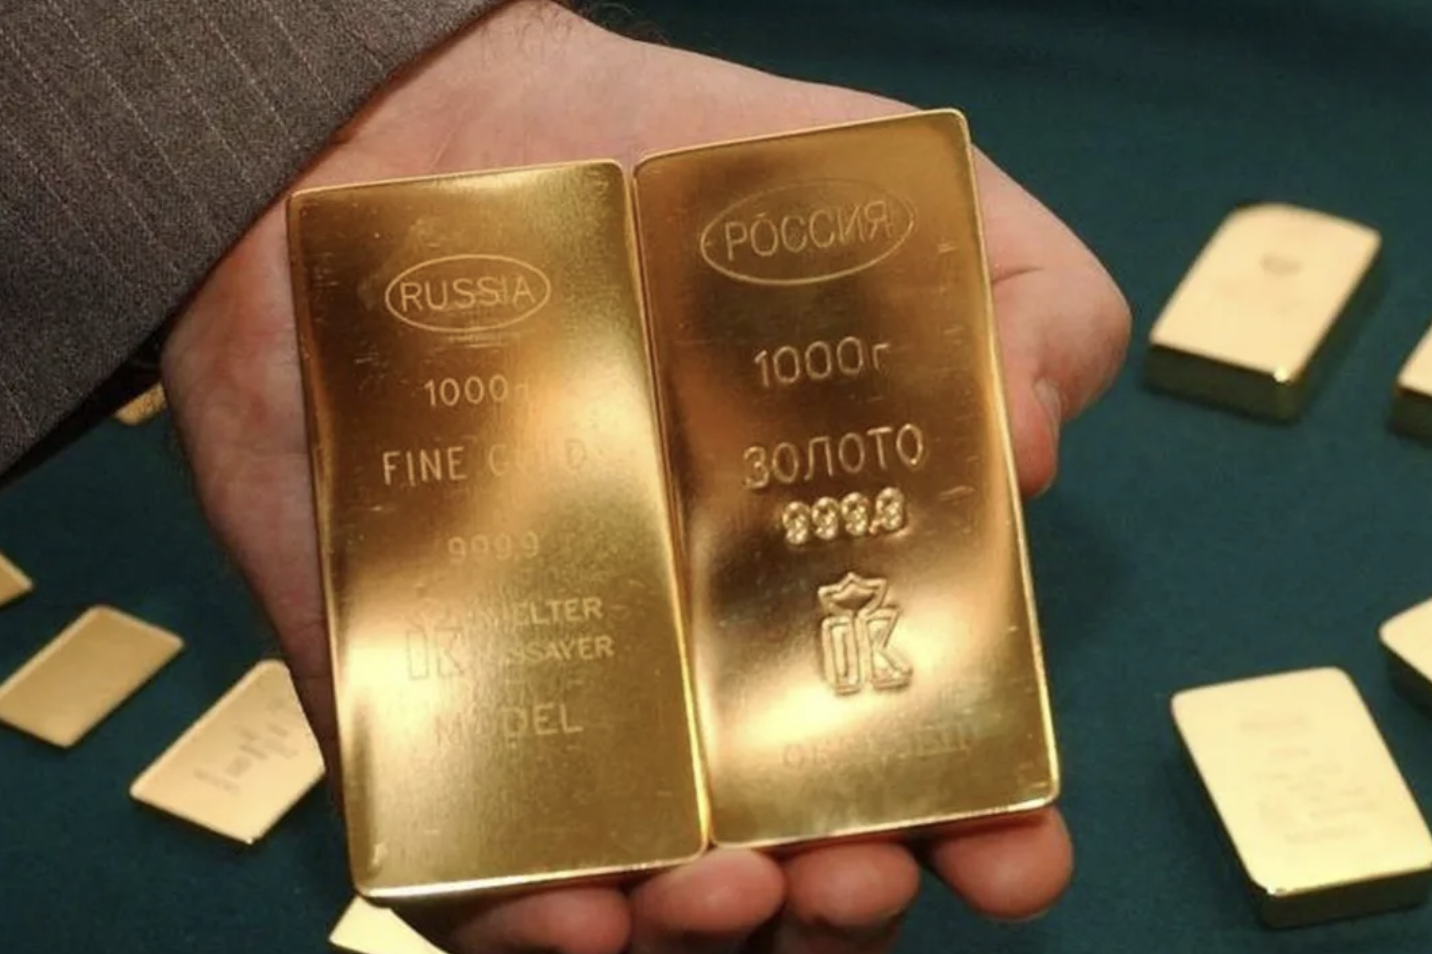 10 гр золота. Слиток золотой. Банковское золото. Банковские золотые слитки. Слитки российского золота.